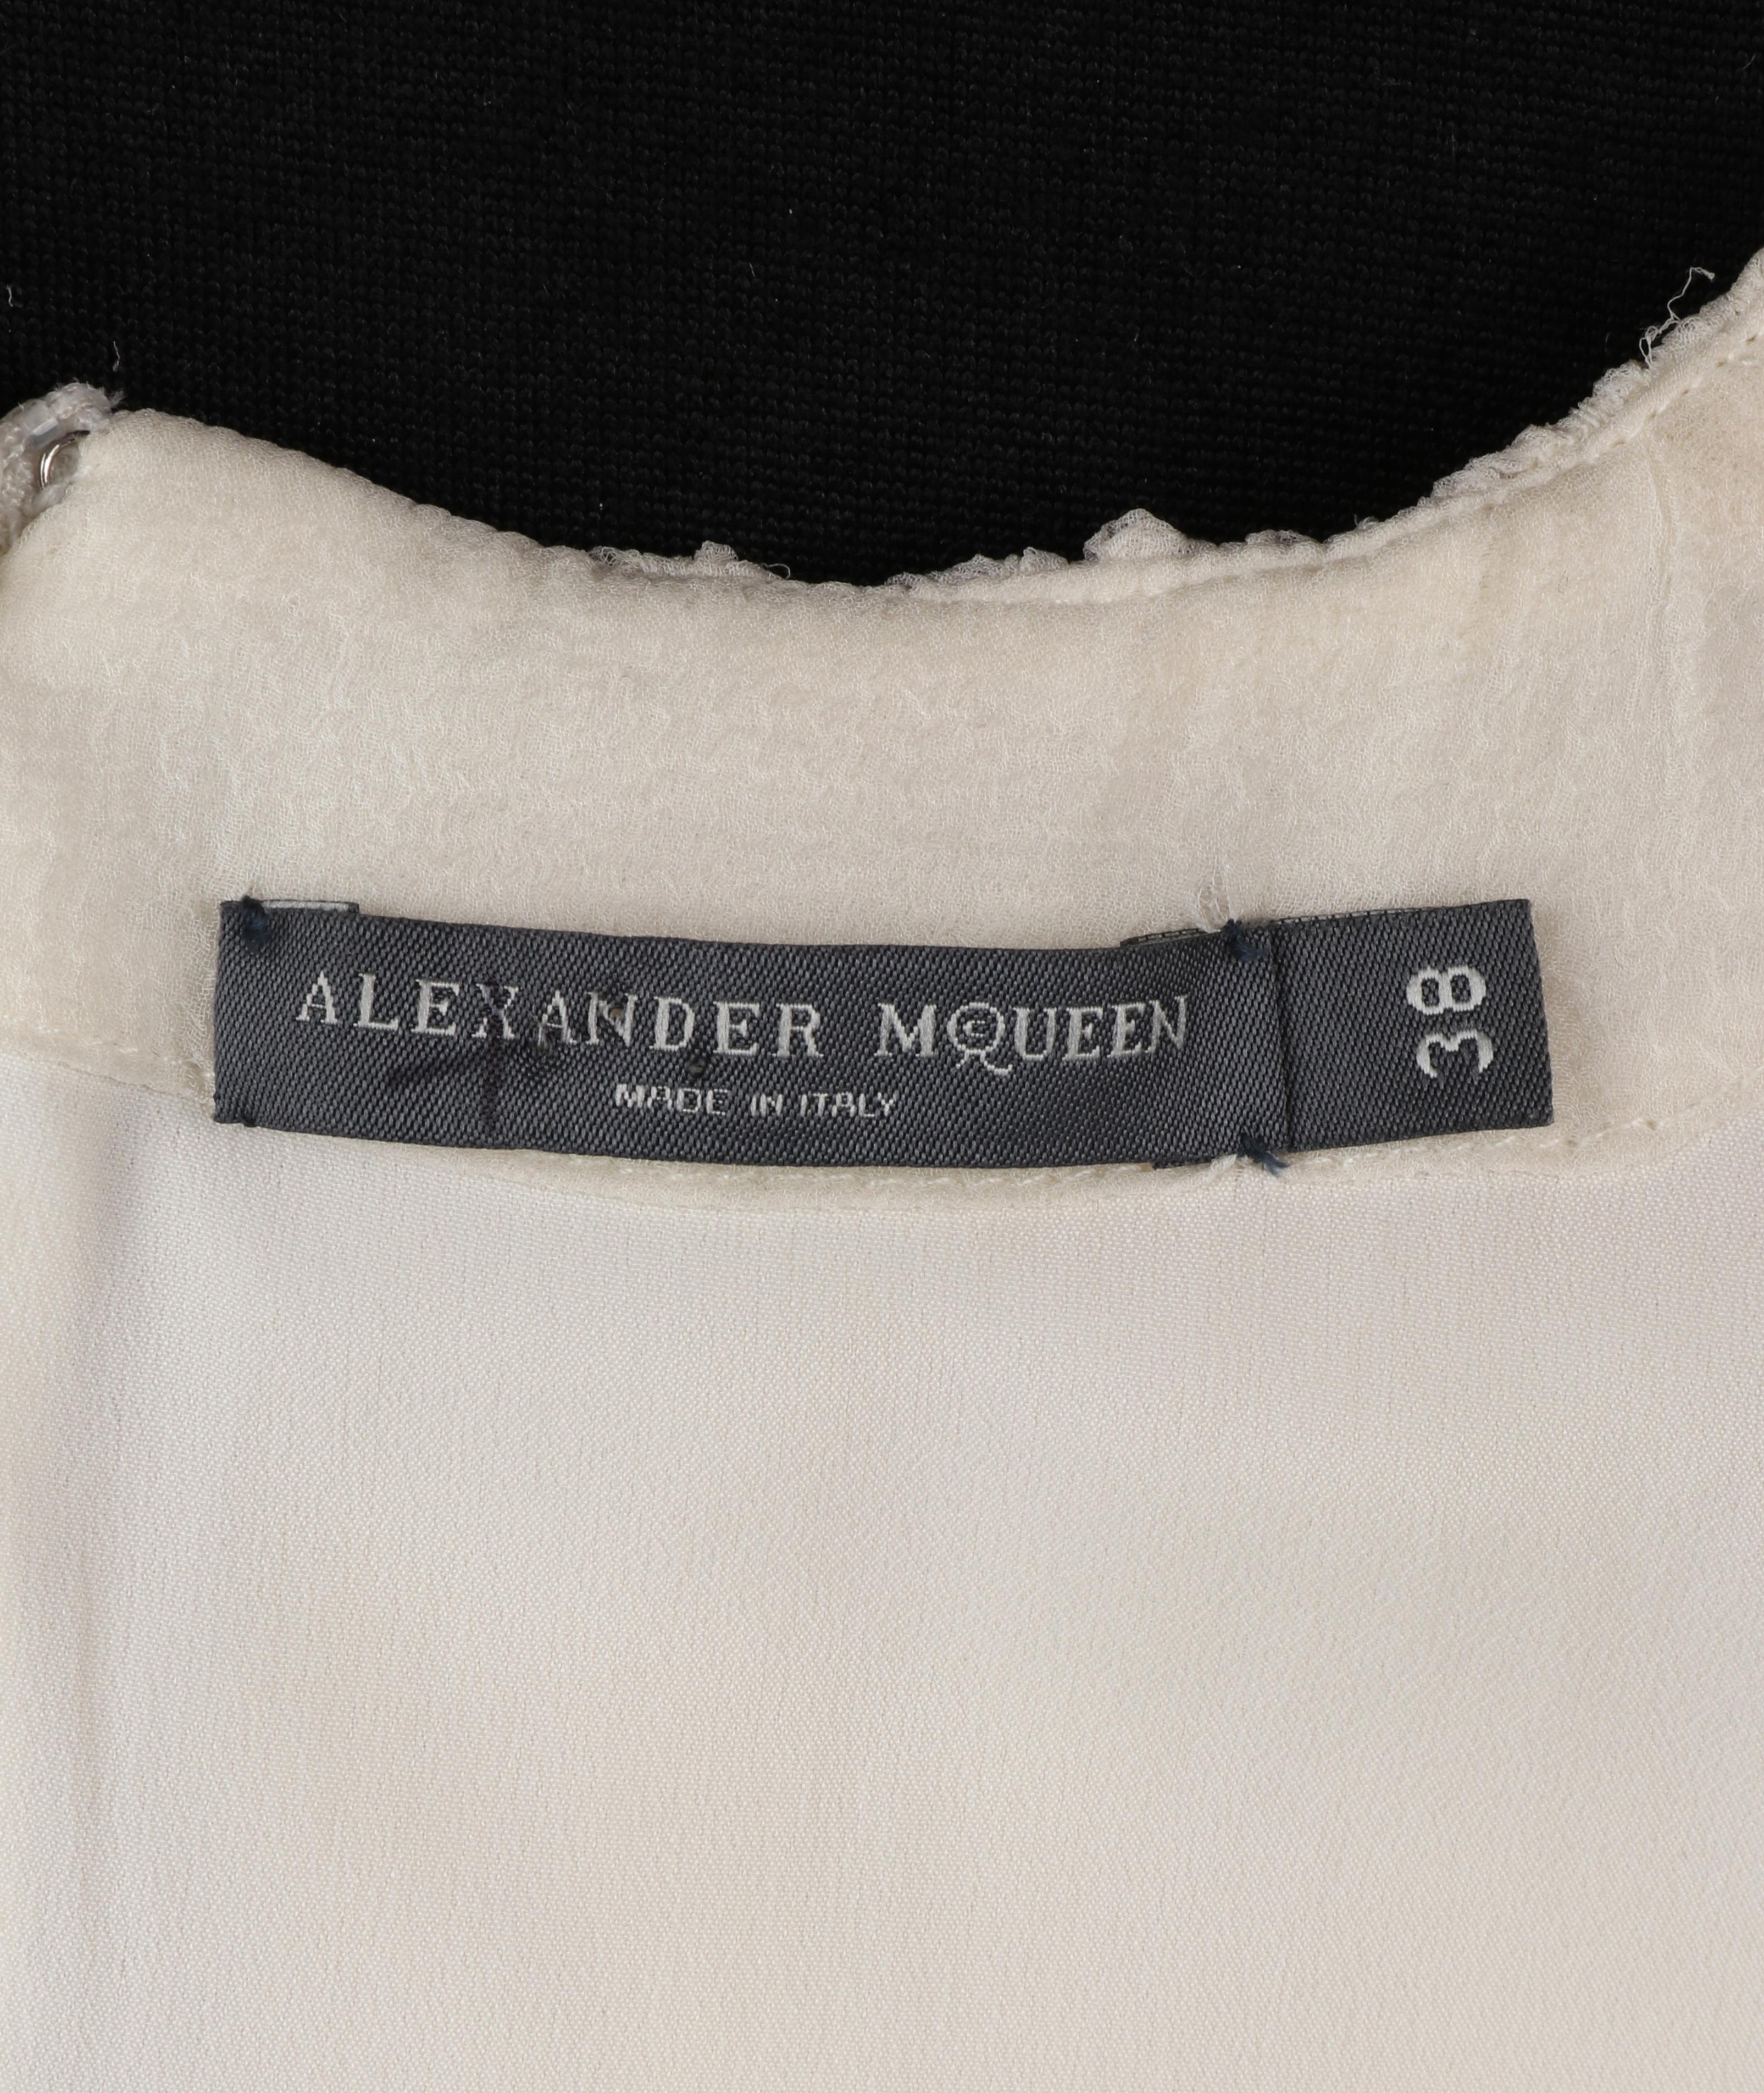 Women's ALEXANDER McQUEEN S/S 2007 Ivory Silk Chiffon Full Length Ballgown Dress Gown For Sale